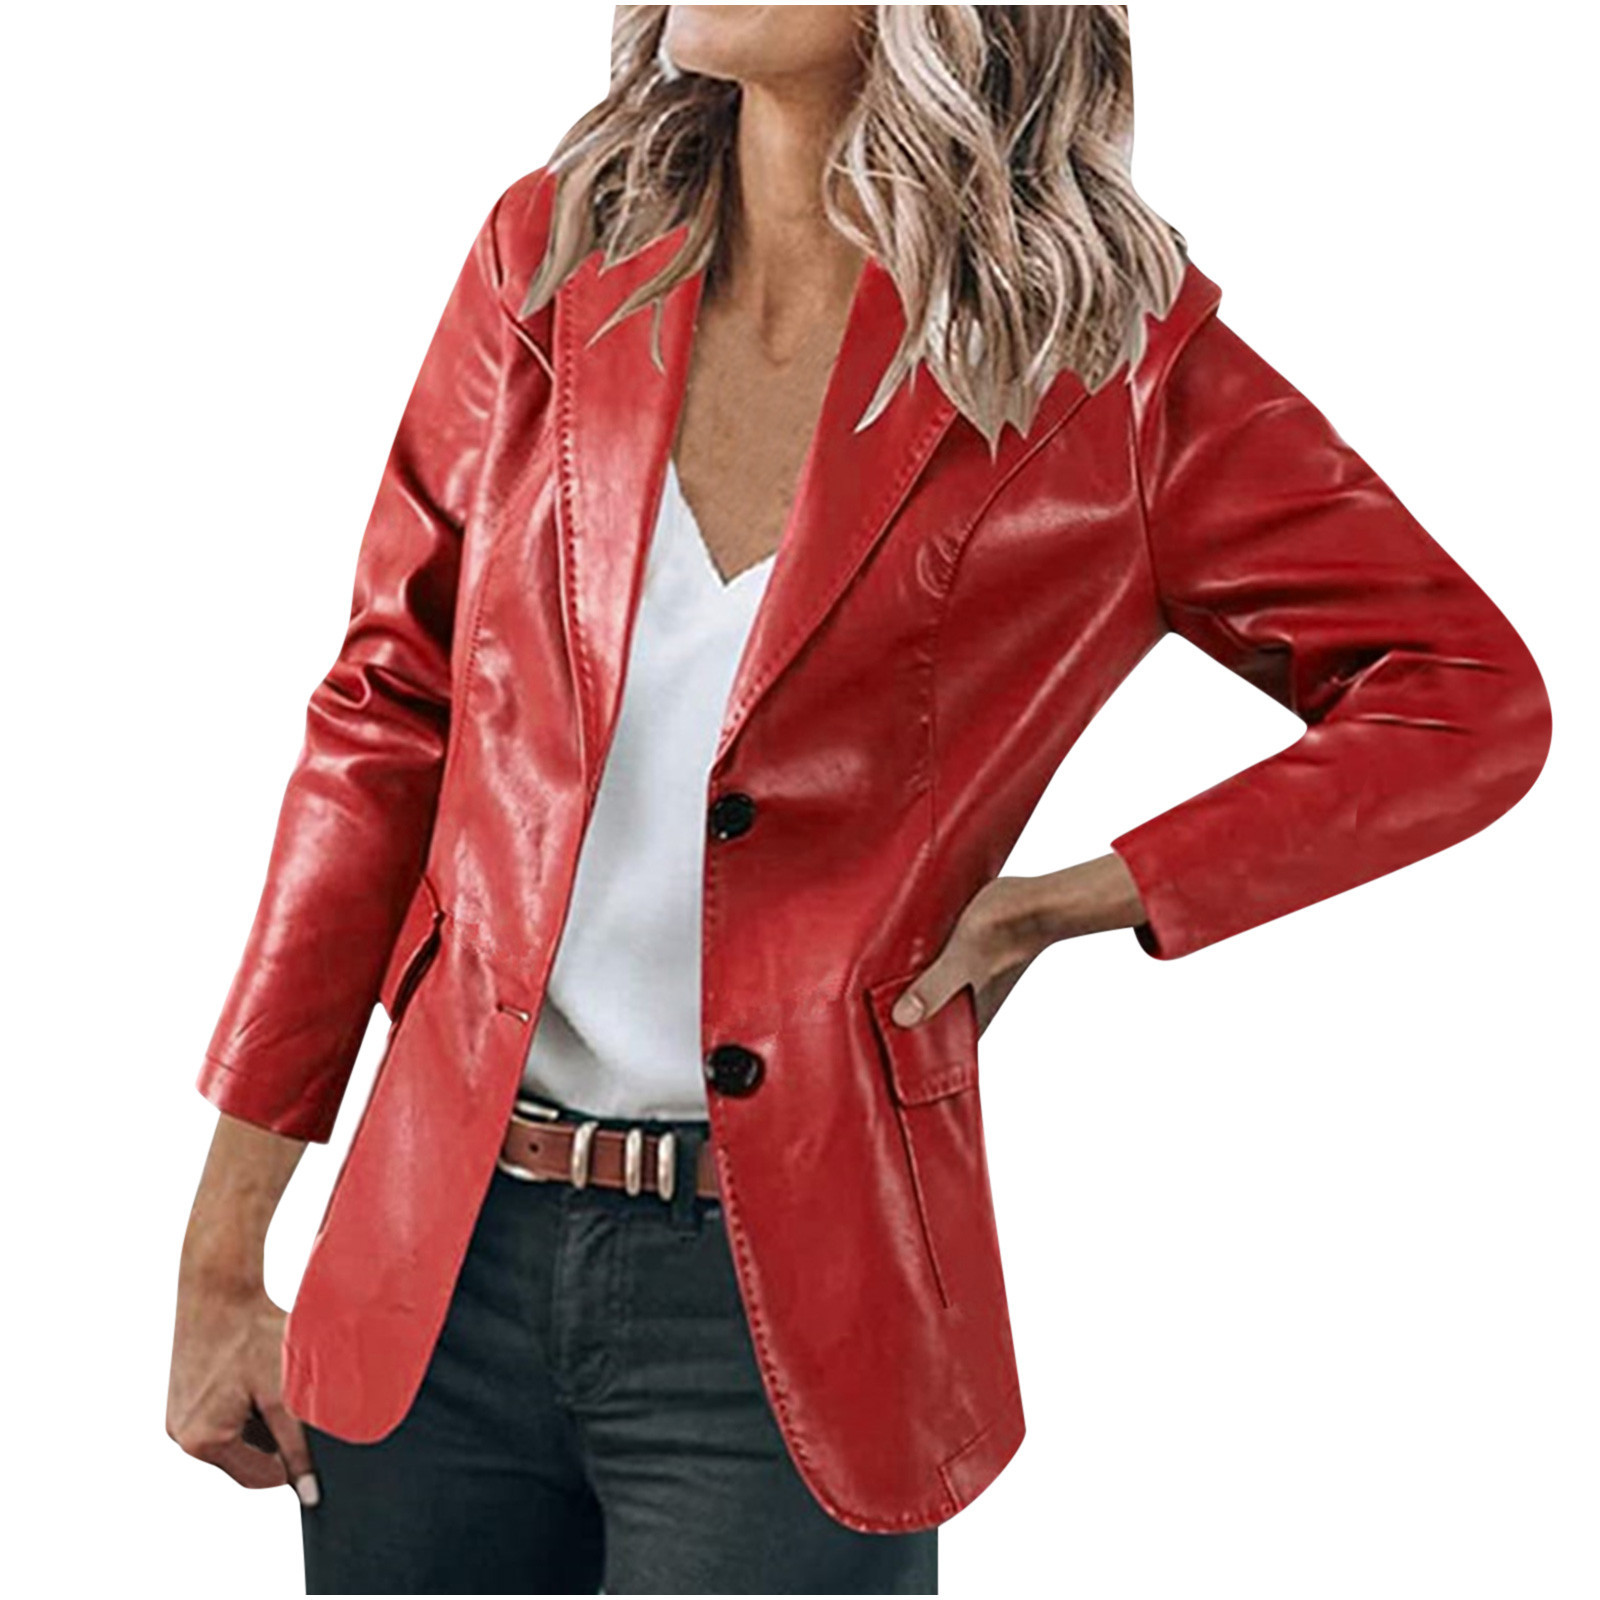 XIAOFFENN Women's Faux Leather Jackets, Lapel Collar Button Pocket Lightweight Motorcycle Jacket Leather Jacket Coat Pleather Outwear Red XL - image 1 of 7